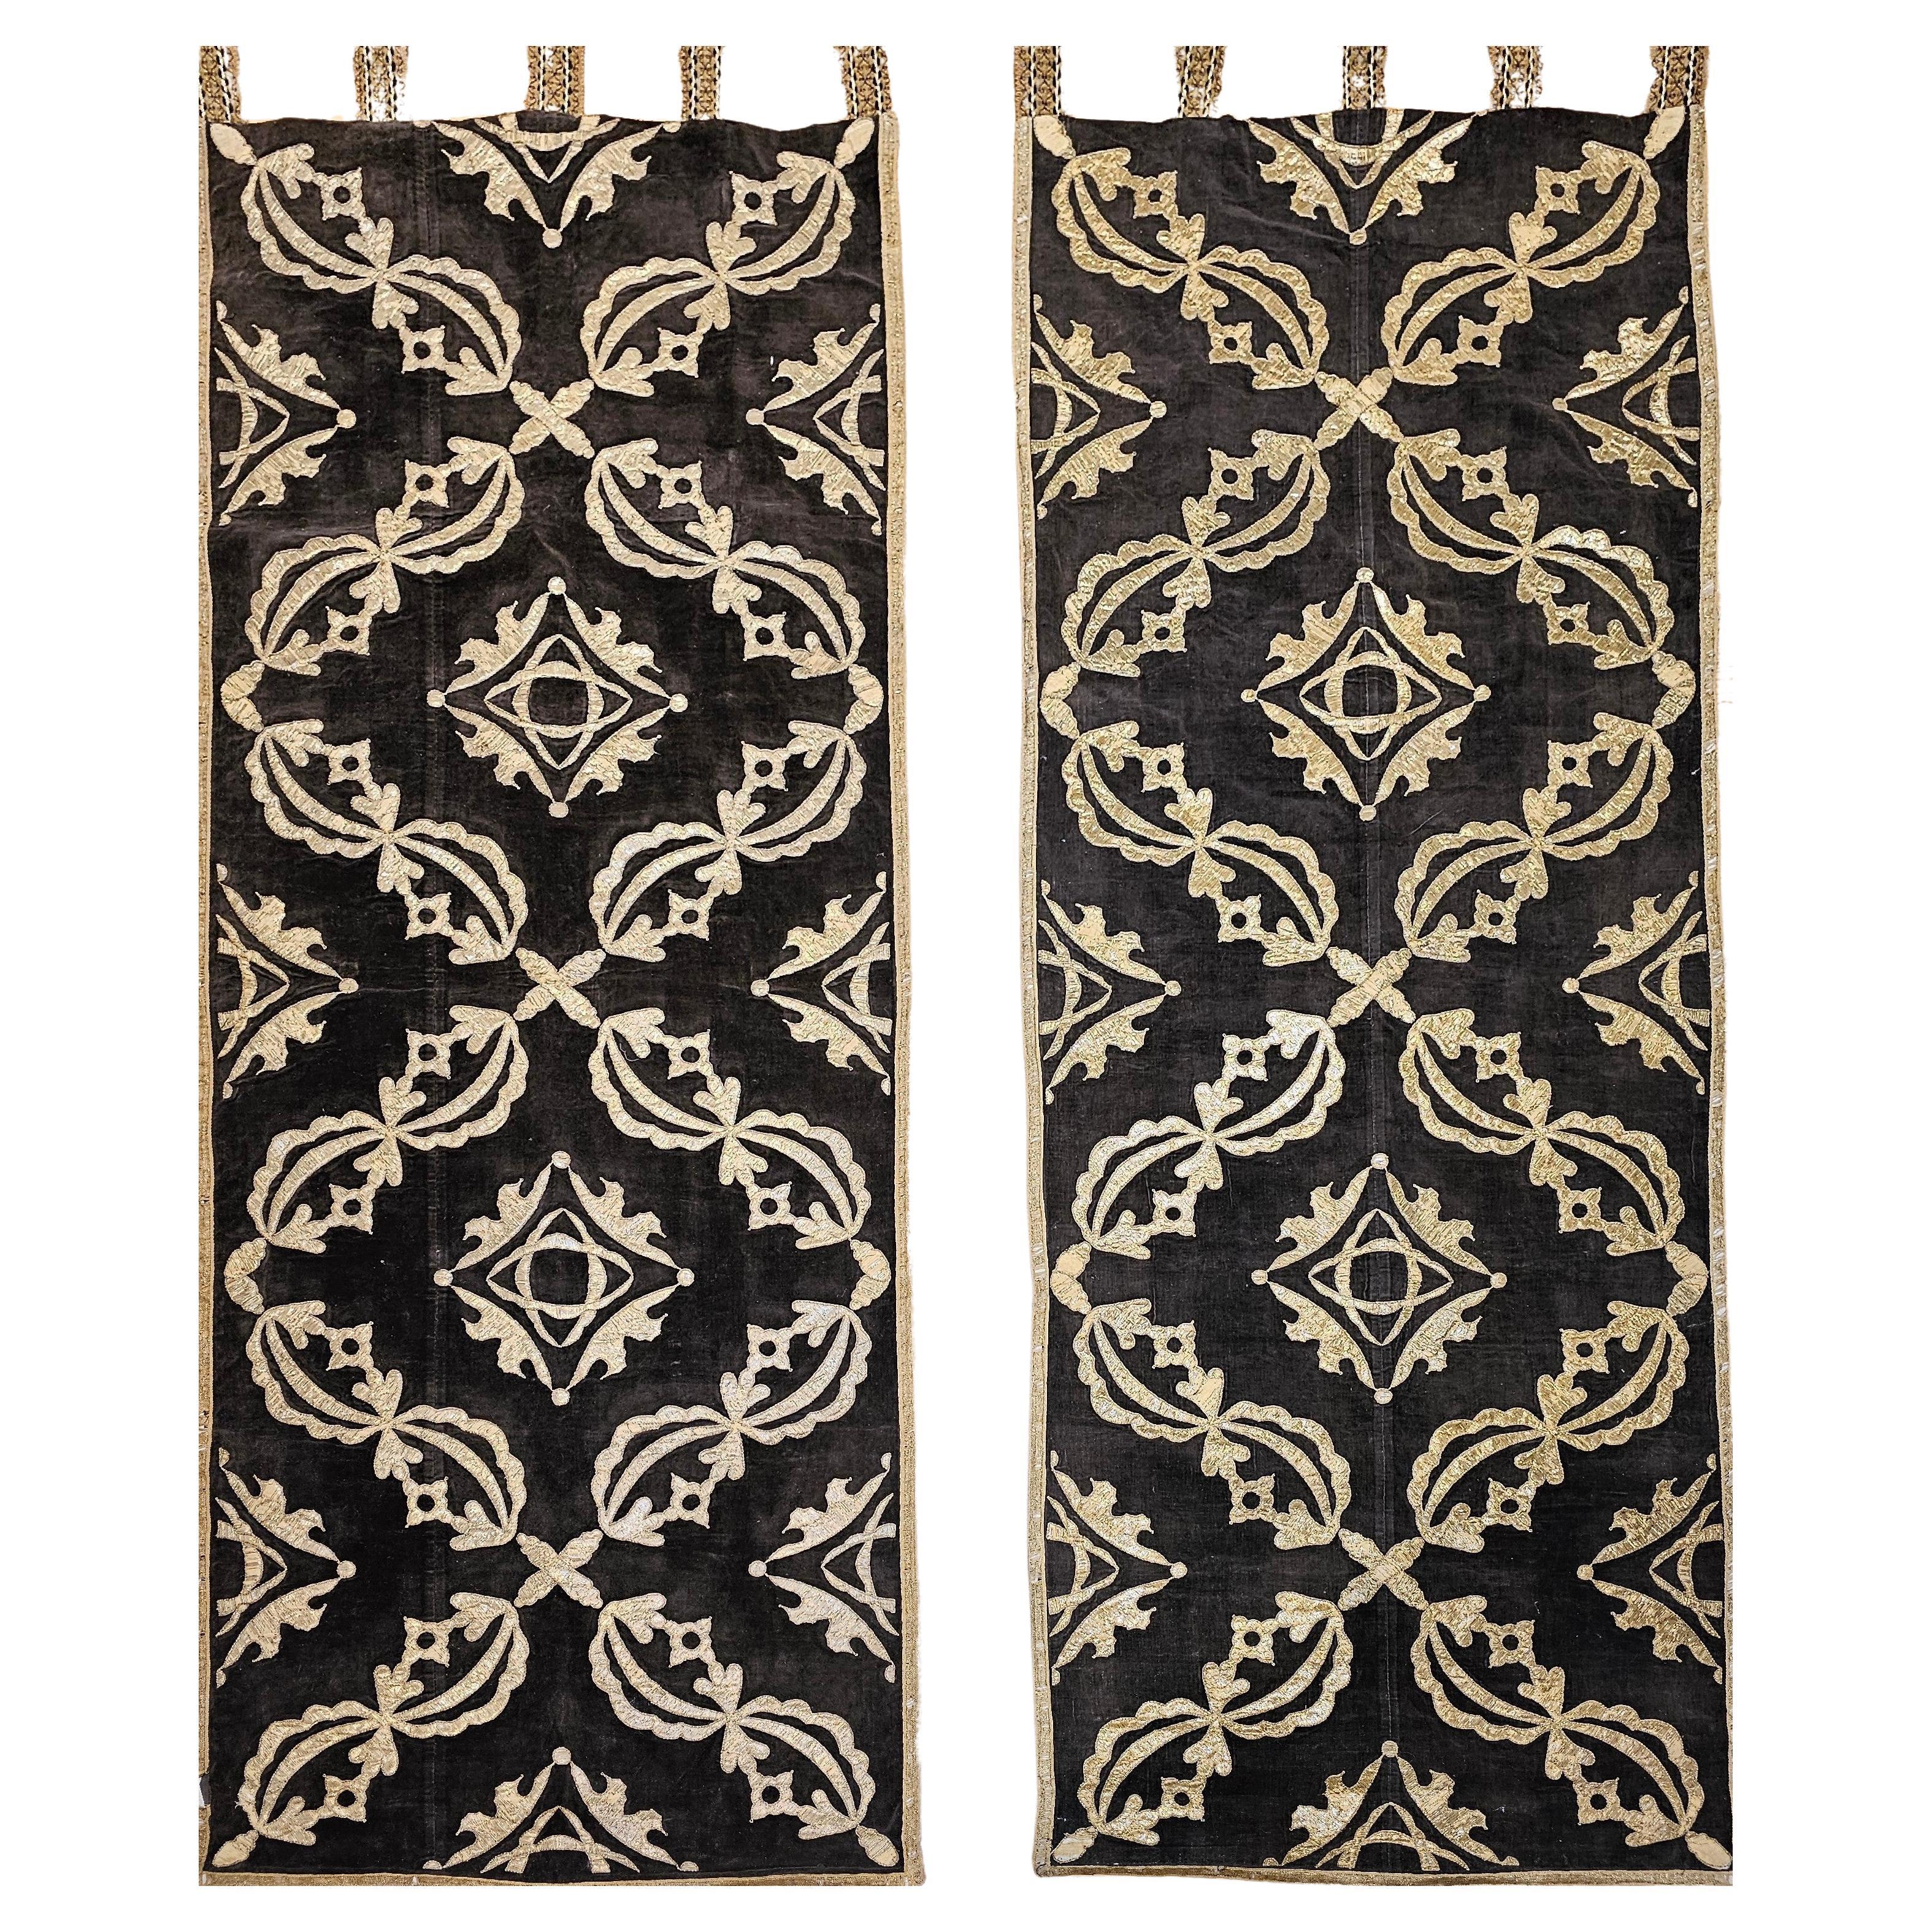 18th Century Ottoman Gilt Threads Brocade Embroidery Textile Panels (A Pair)